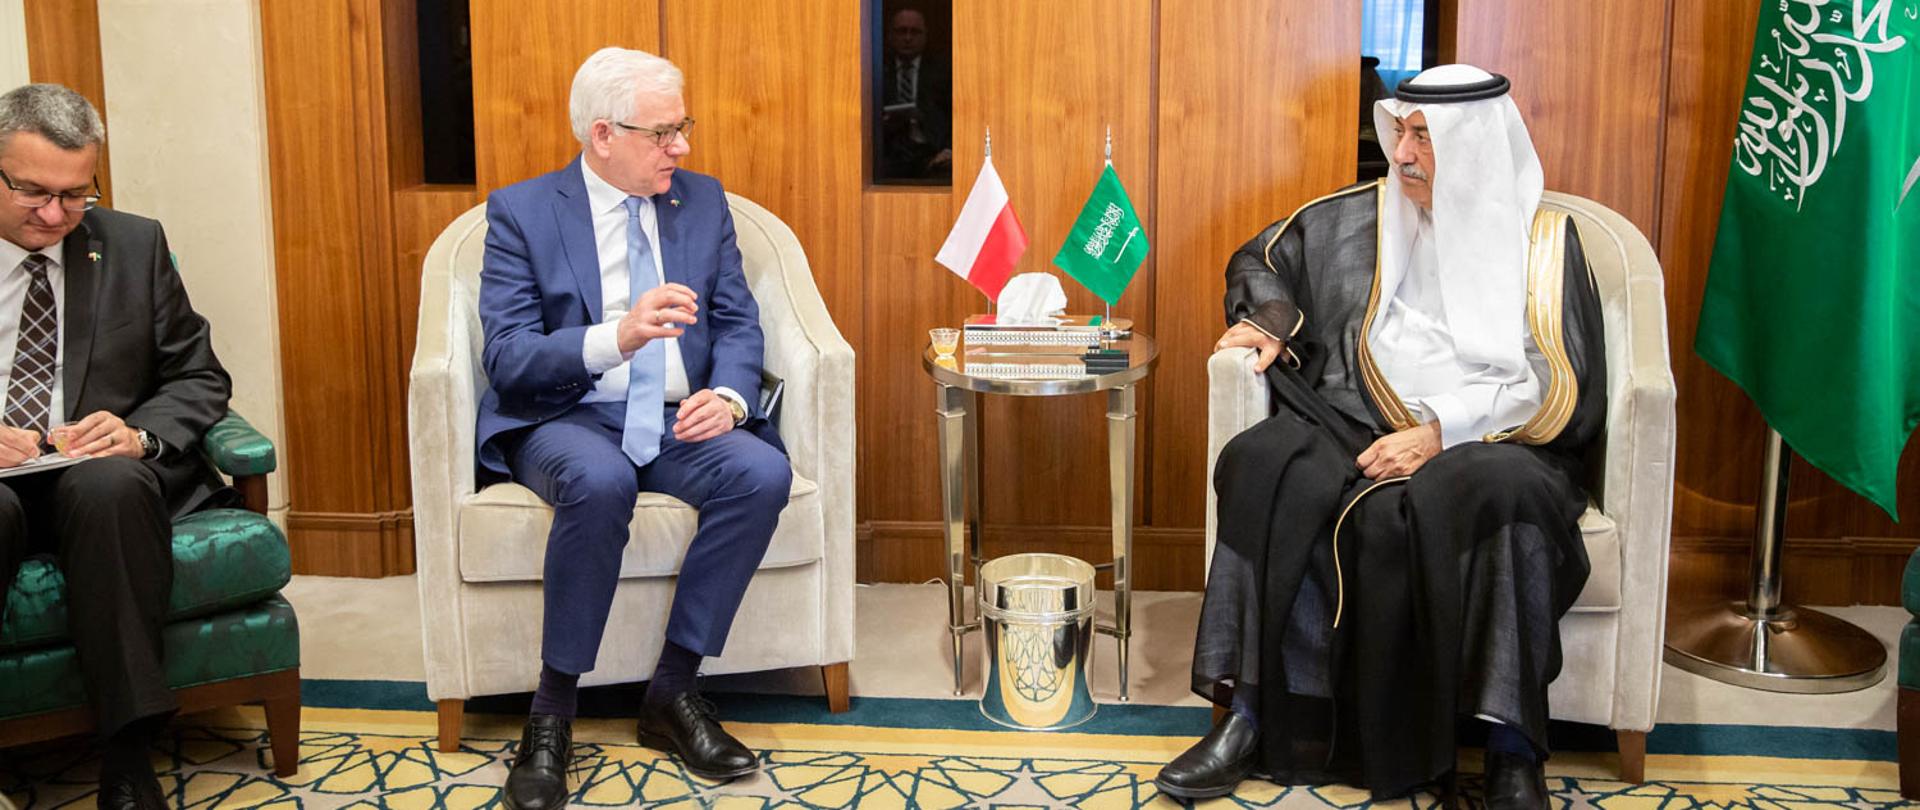 Minister Jacek Czaputowicz visits Saudi Arabia